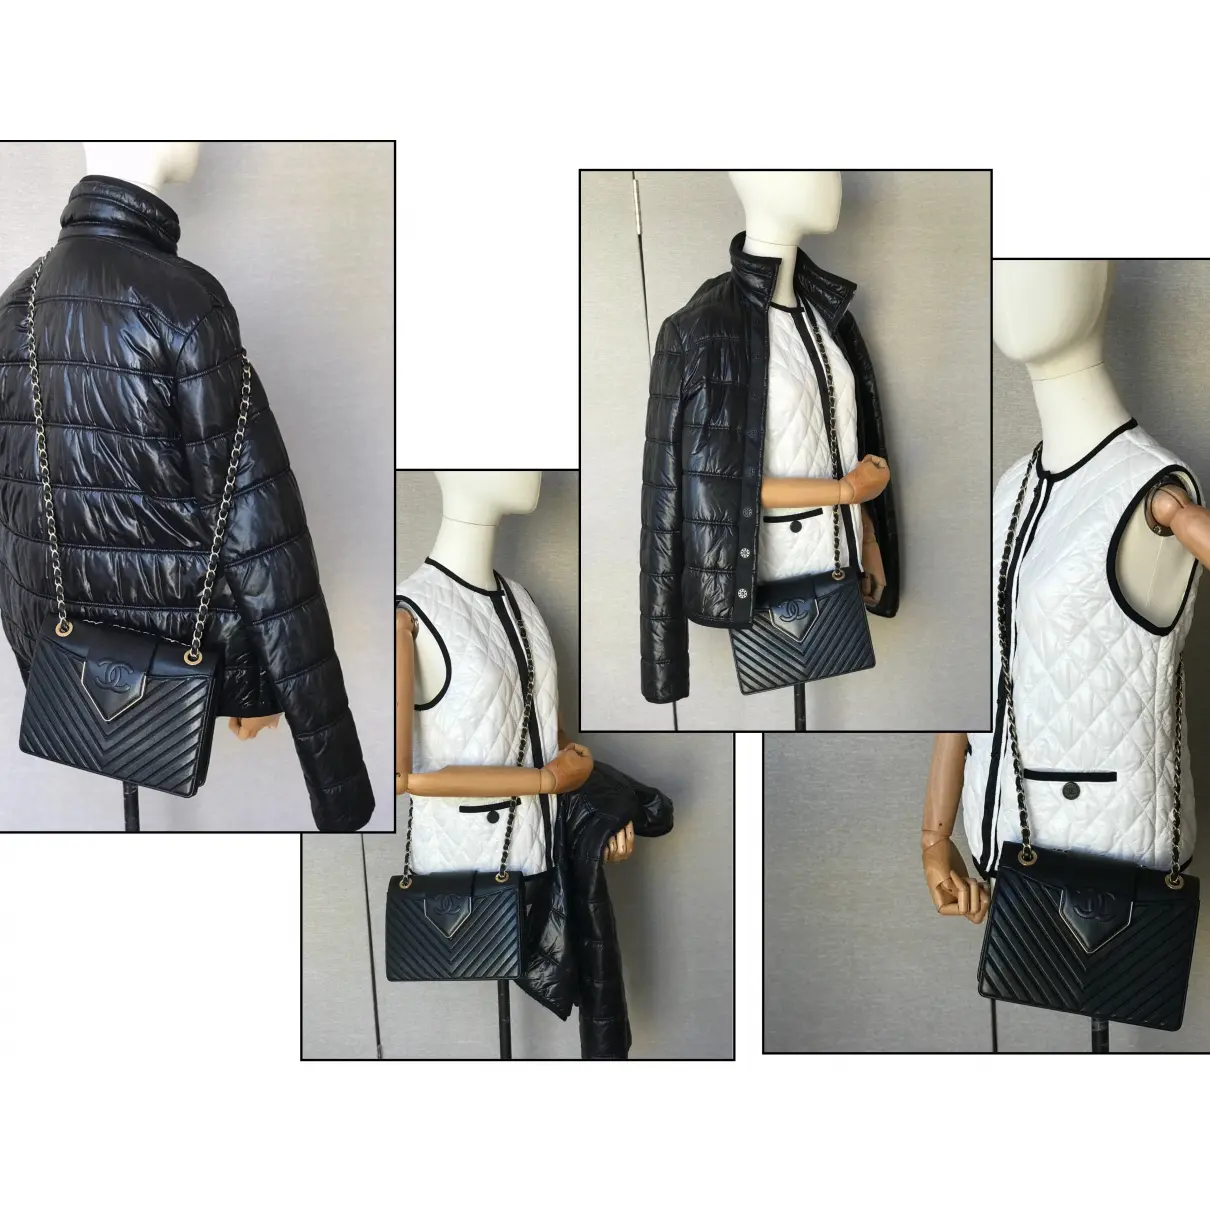 Chanel Leather handbag for sale